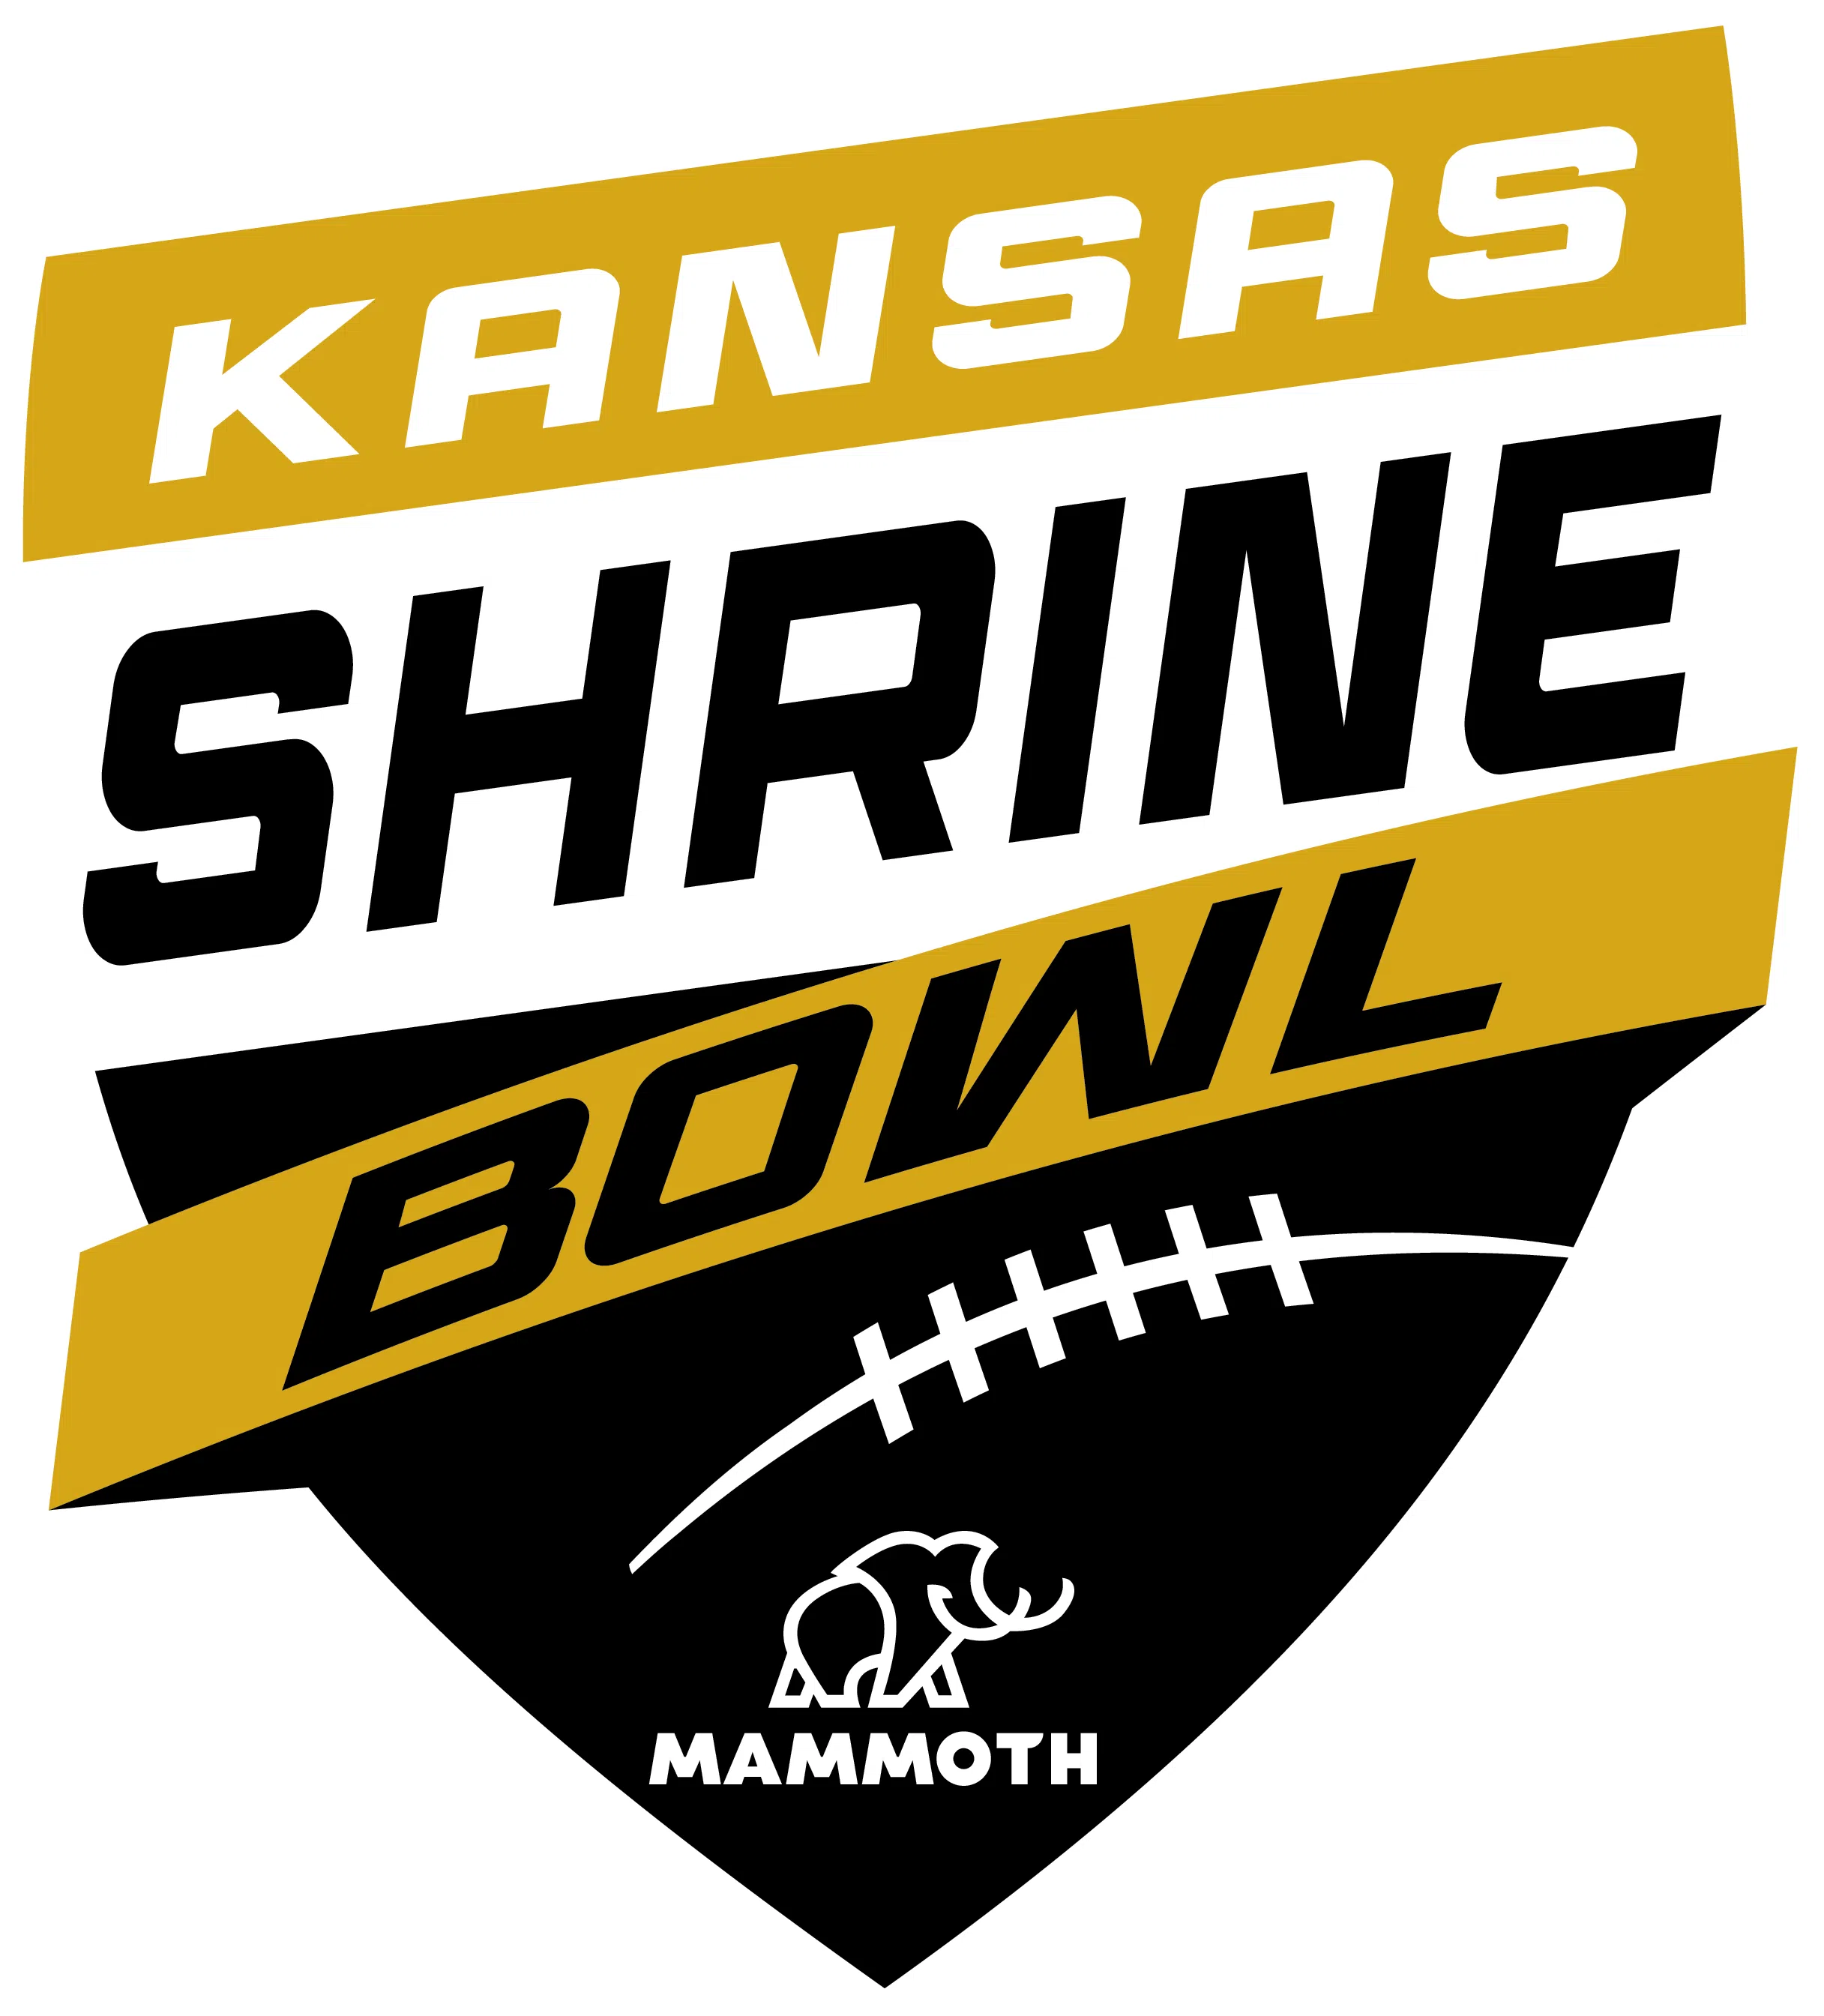 51st annual Kansas Shrine Bowl set for Saturday with festivities kicking off on Thursday